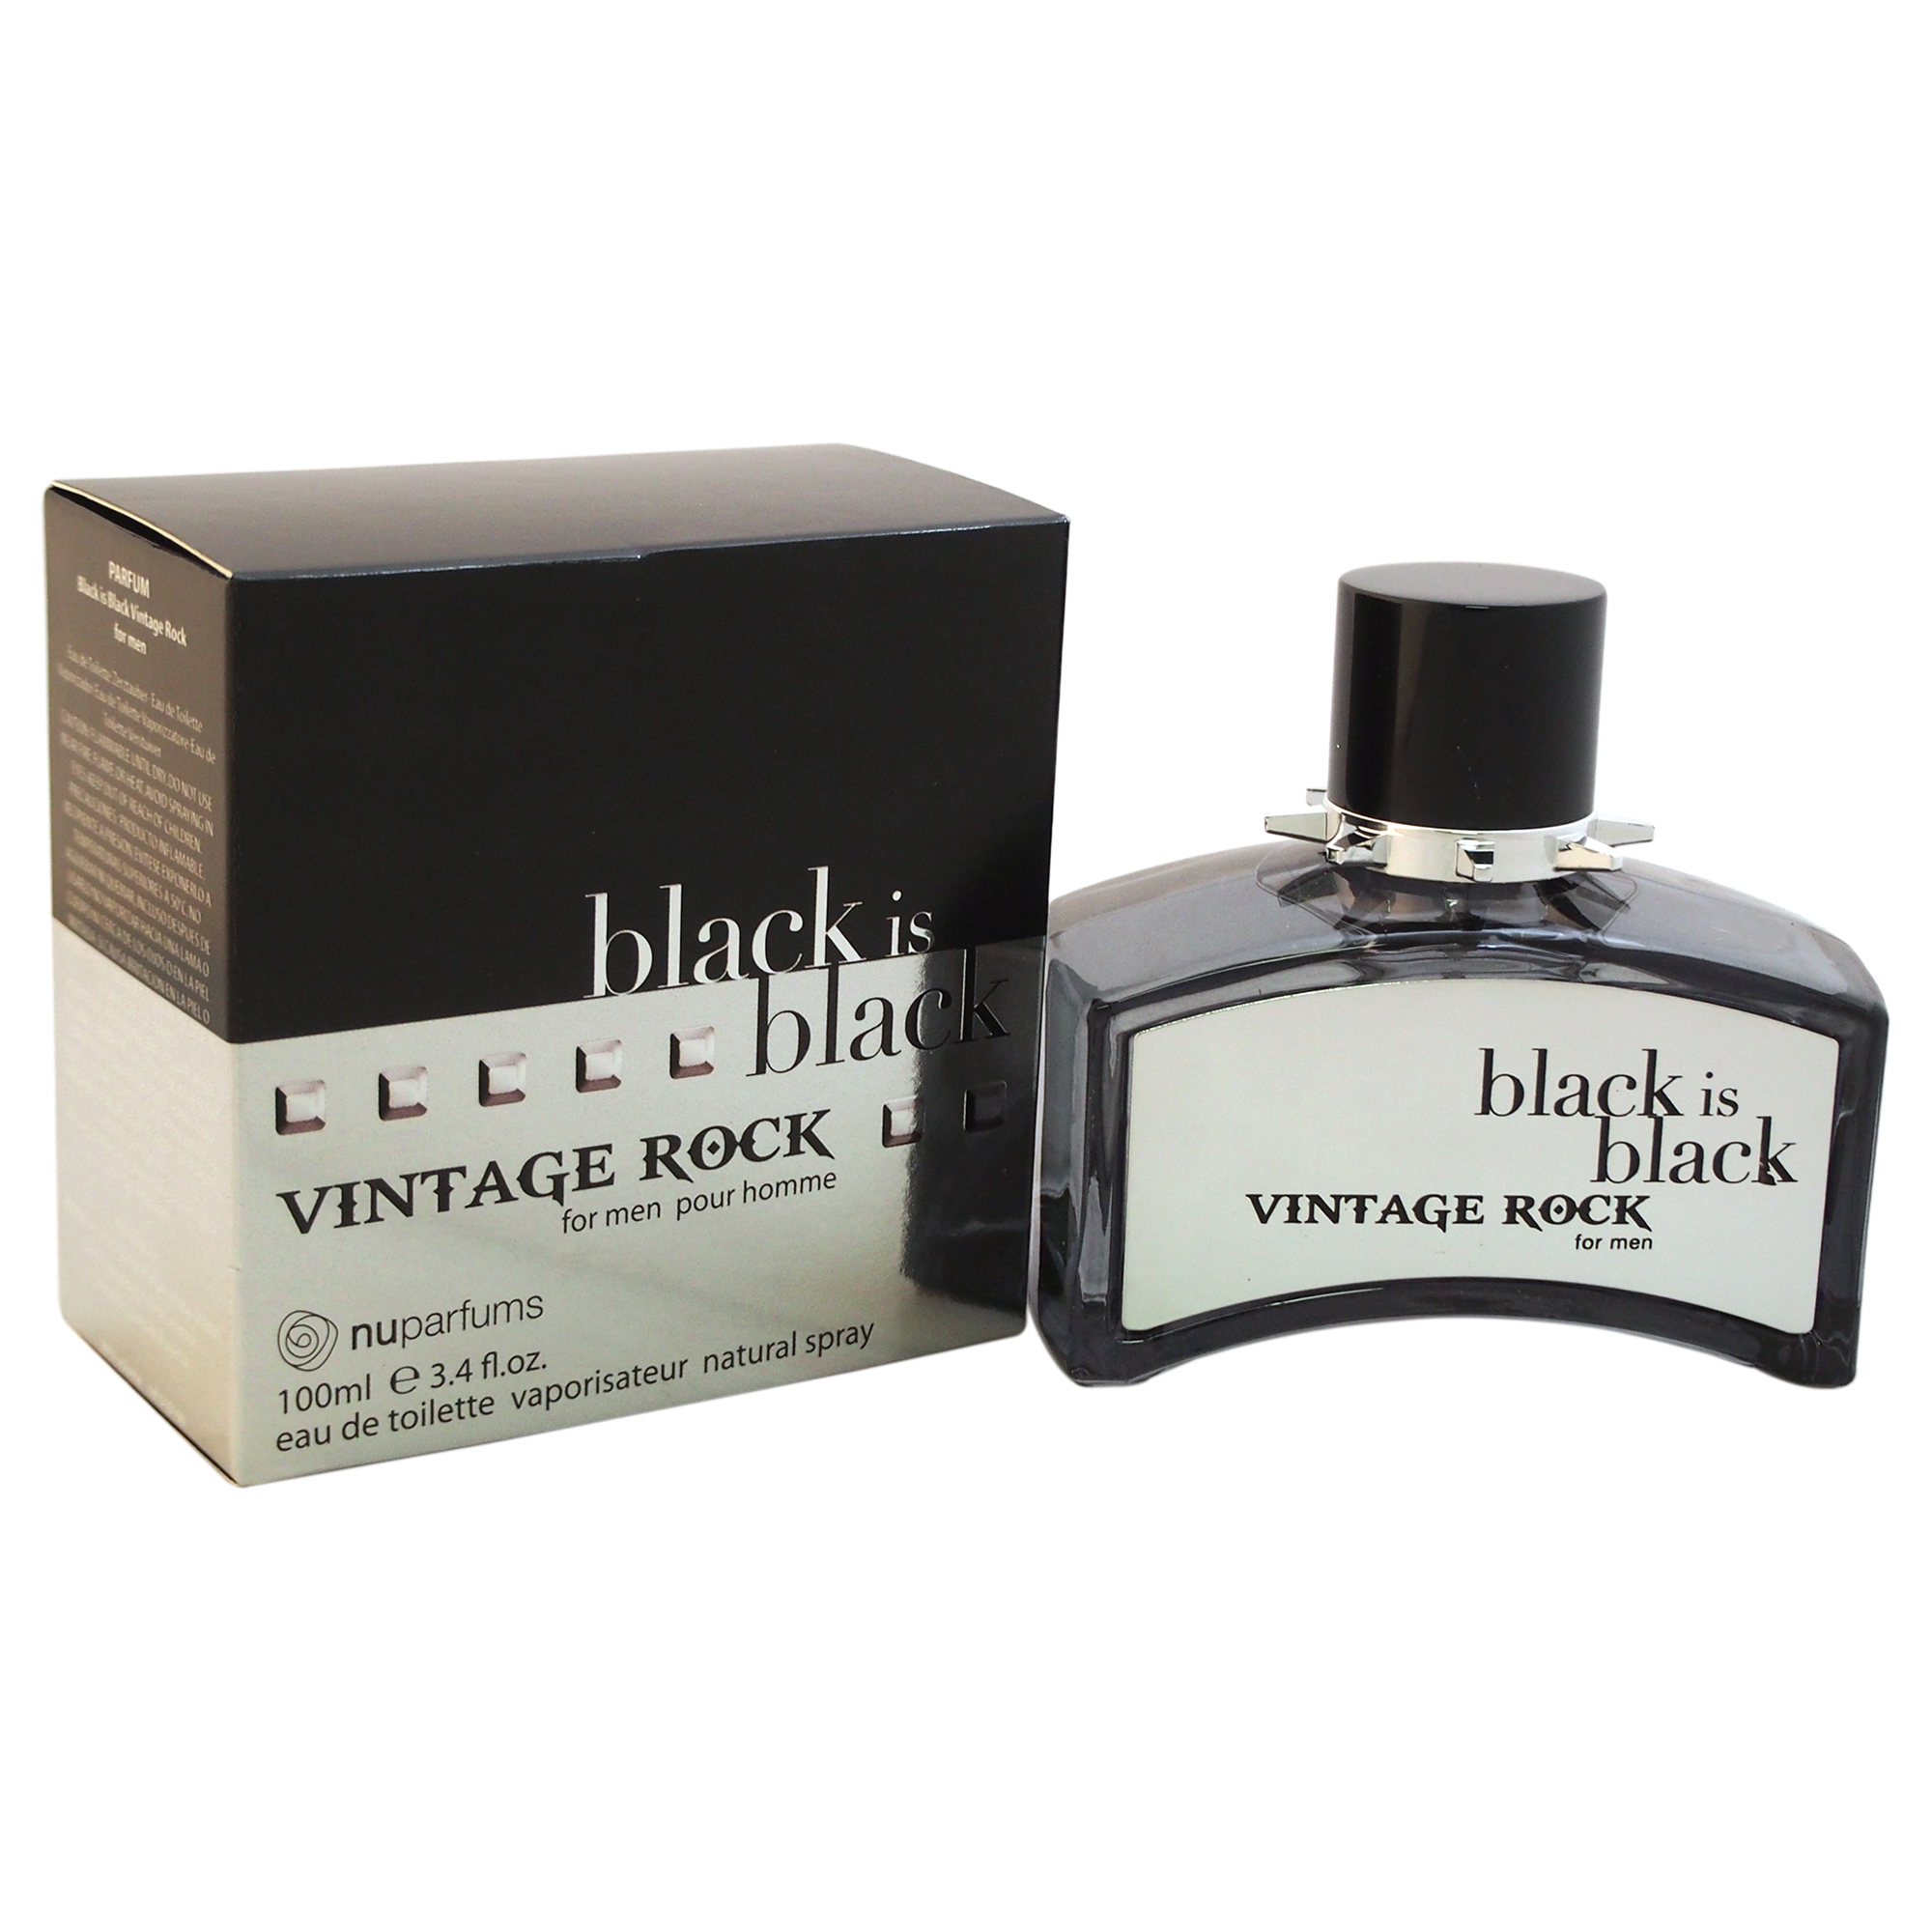 Black Is Black Vintage Rock by Nuparfums for Men - 3.4 oz EDT Spray